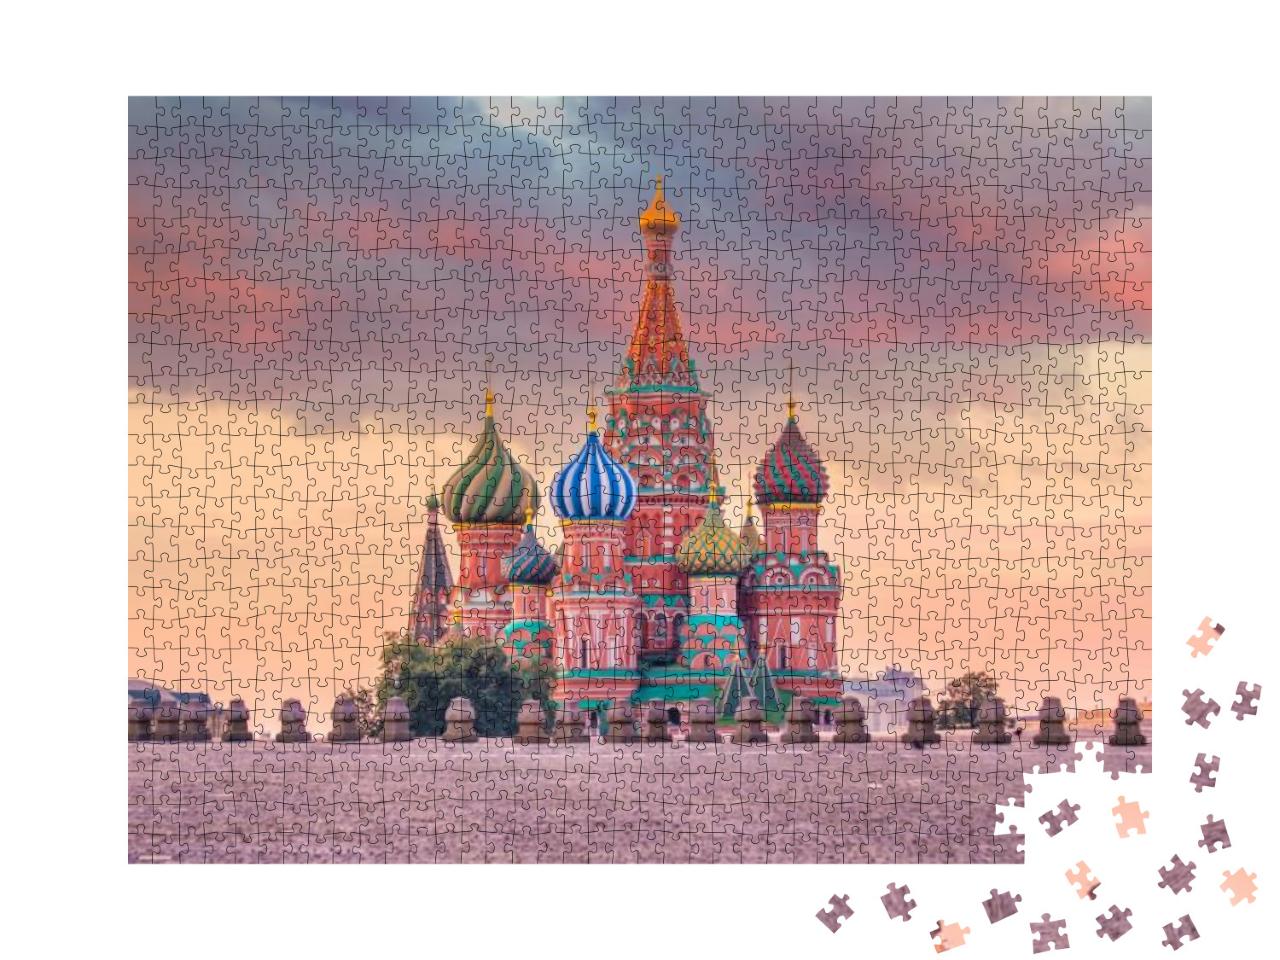 Puzzle 1000 Teile „Basilius-Kathedrale am Roten Platz in Moskau bei Sonnenaufgang, Russland“